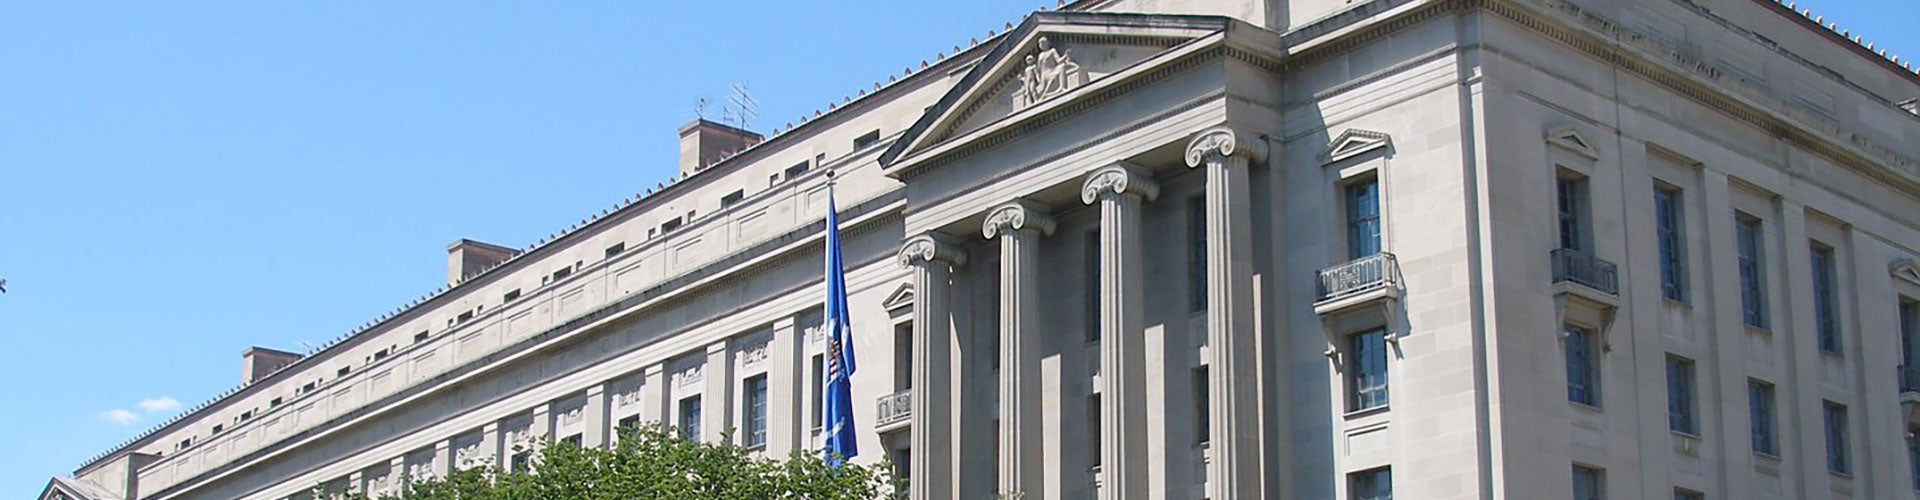 Department of Justice building - Antitrust Law Program